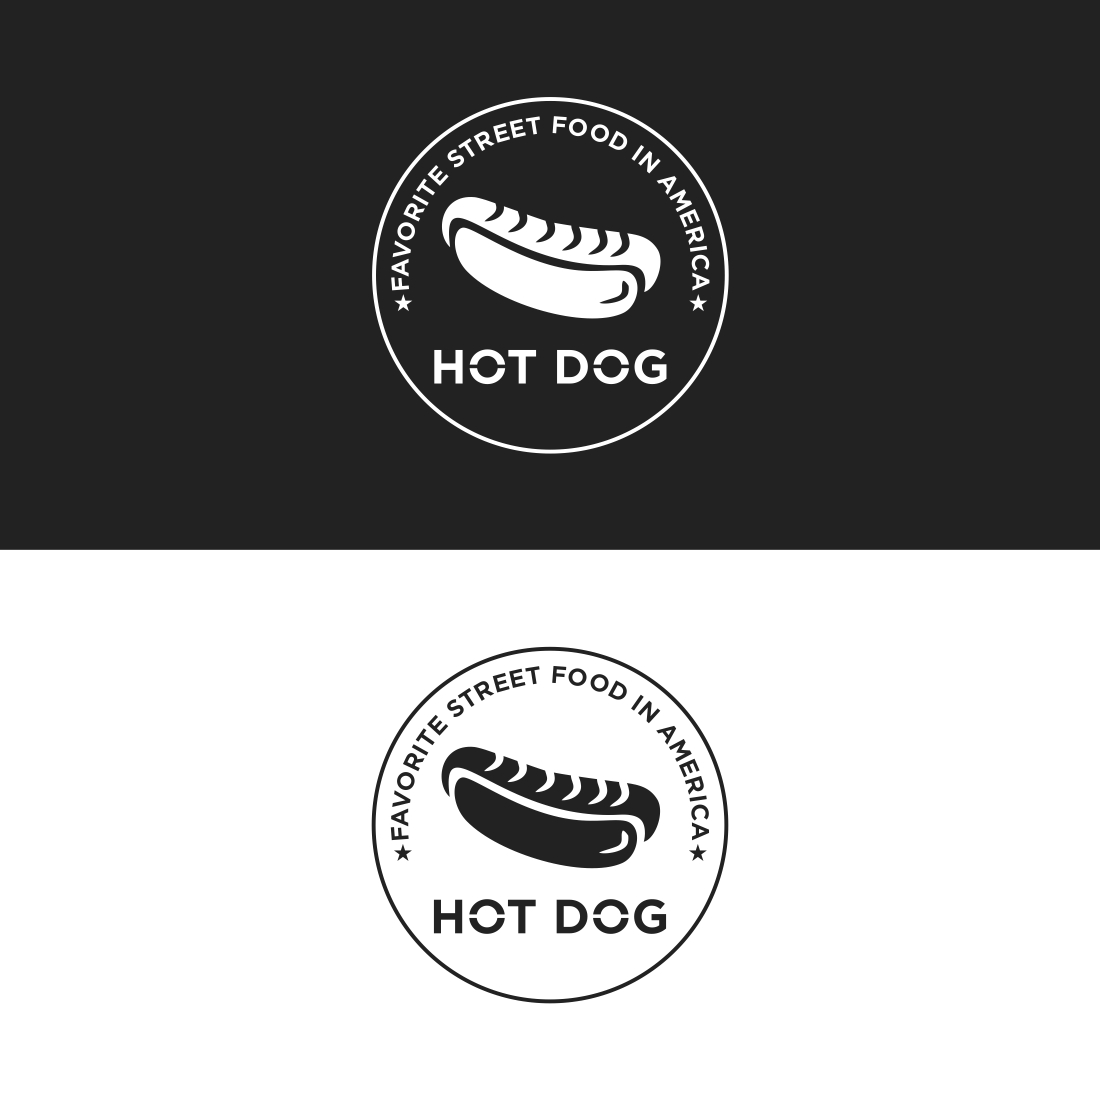 Hotdog vector icon illustration isolated on black and white background cover image.